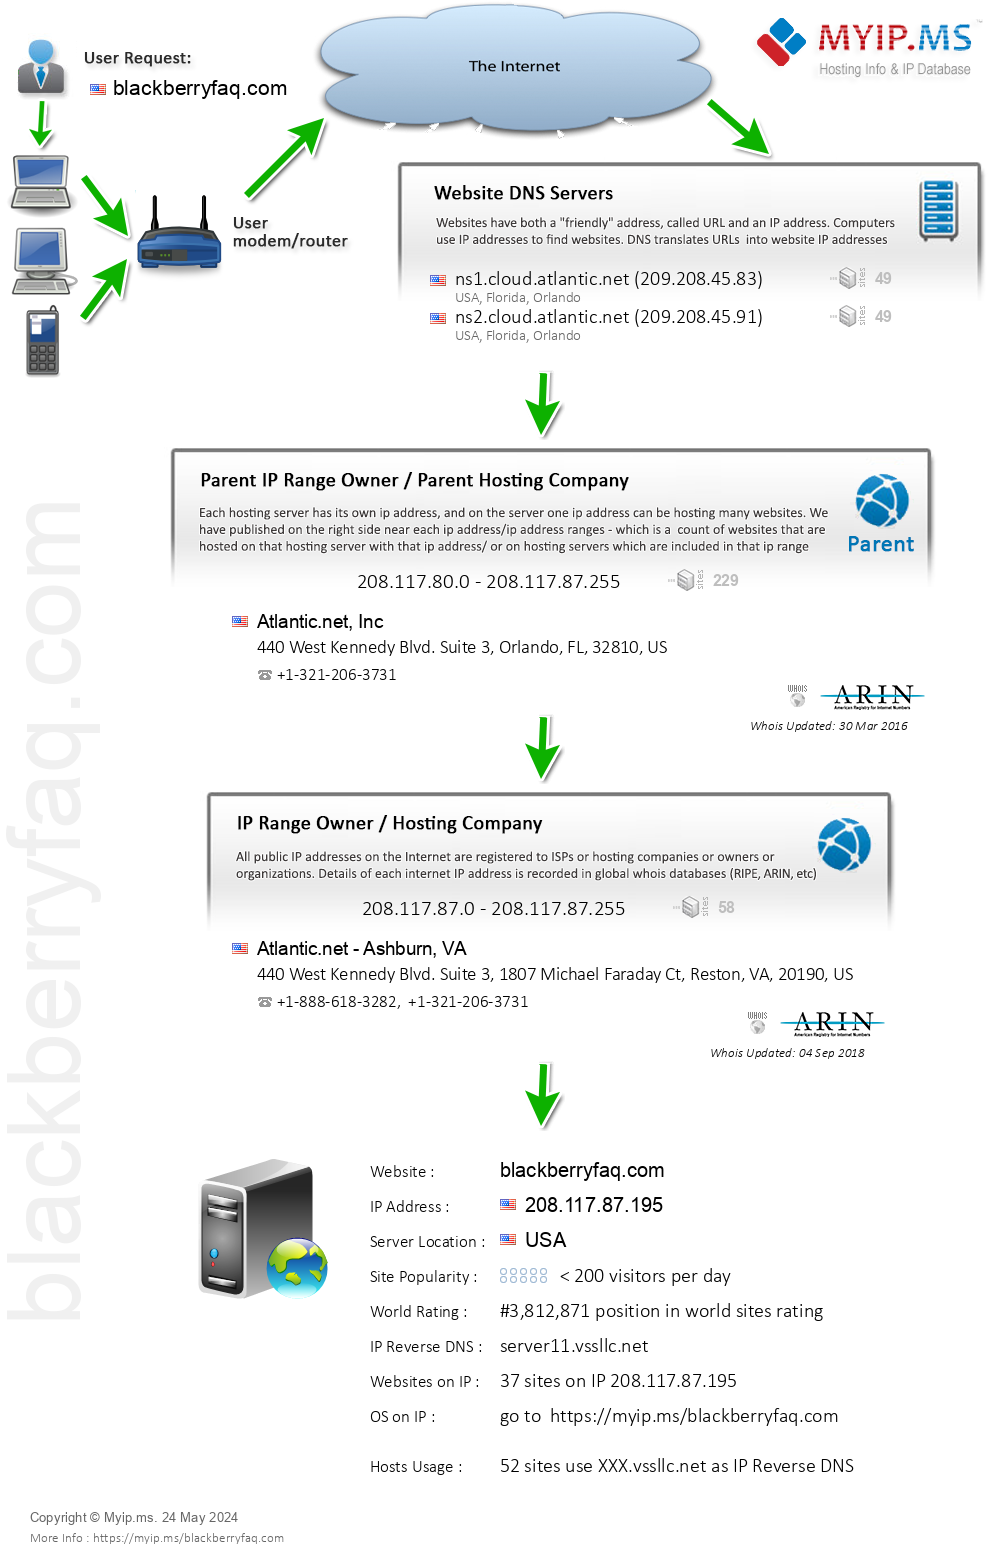 Blackberryfaq.com - Website Hosting Visual IP Diagram